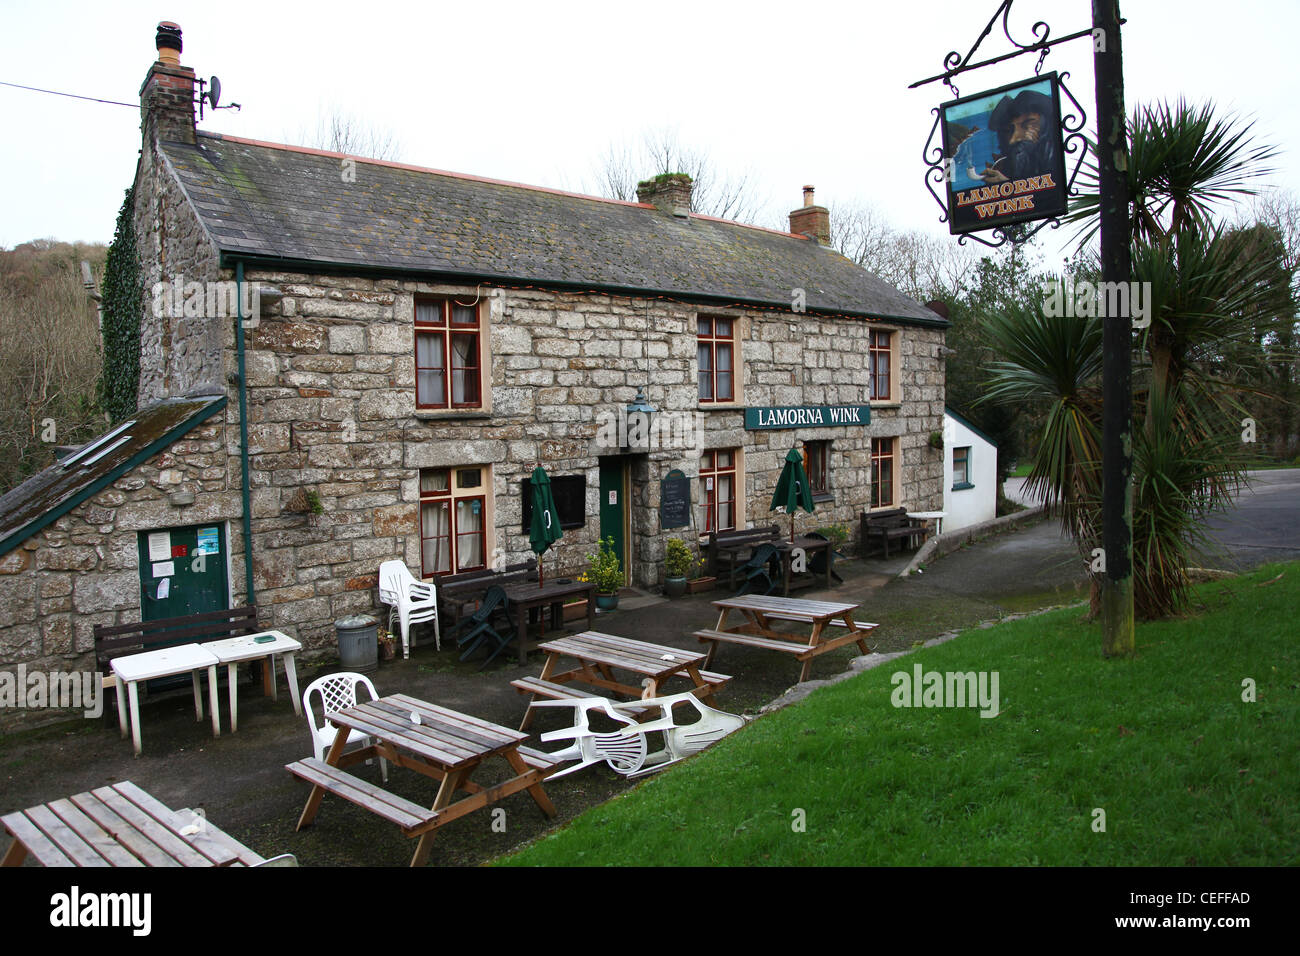 Le Lamorna Wink pub, ou maison publique, Lamorna Cove, Cornwall, West Country, Angleterre, Royaume-Uni Banque D'Images